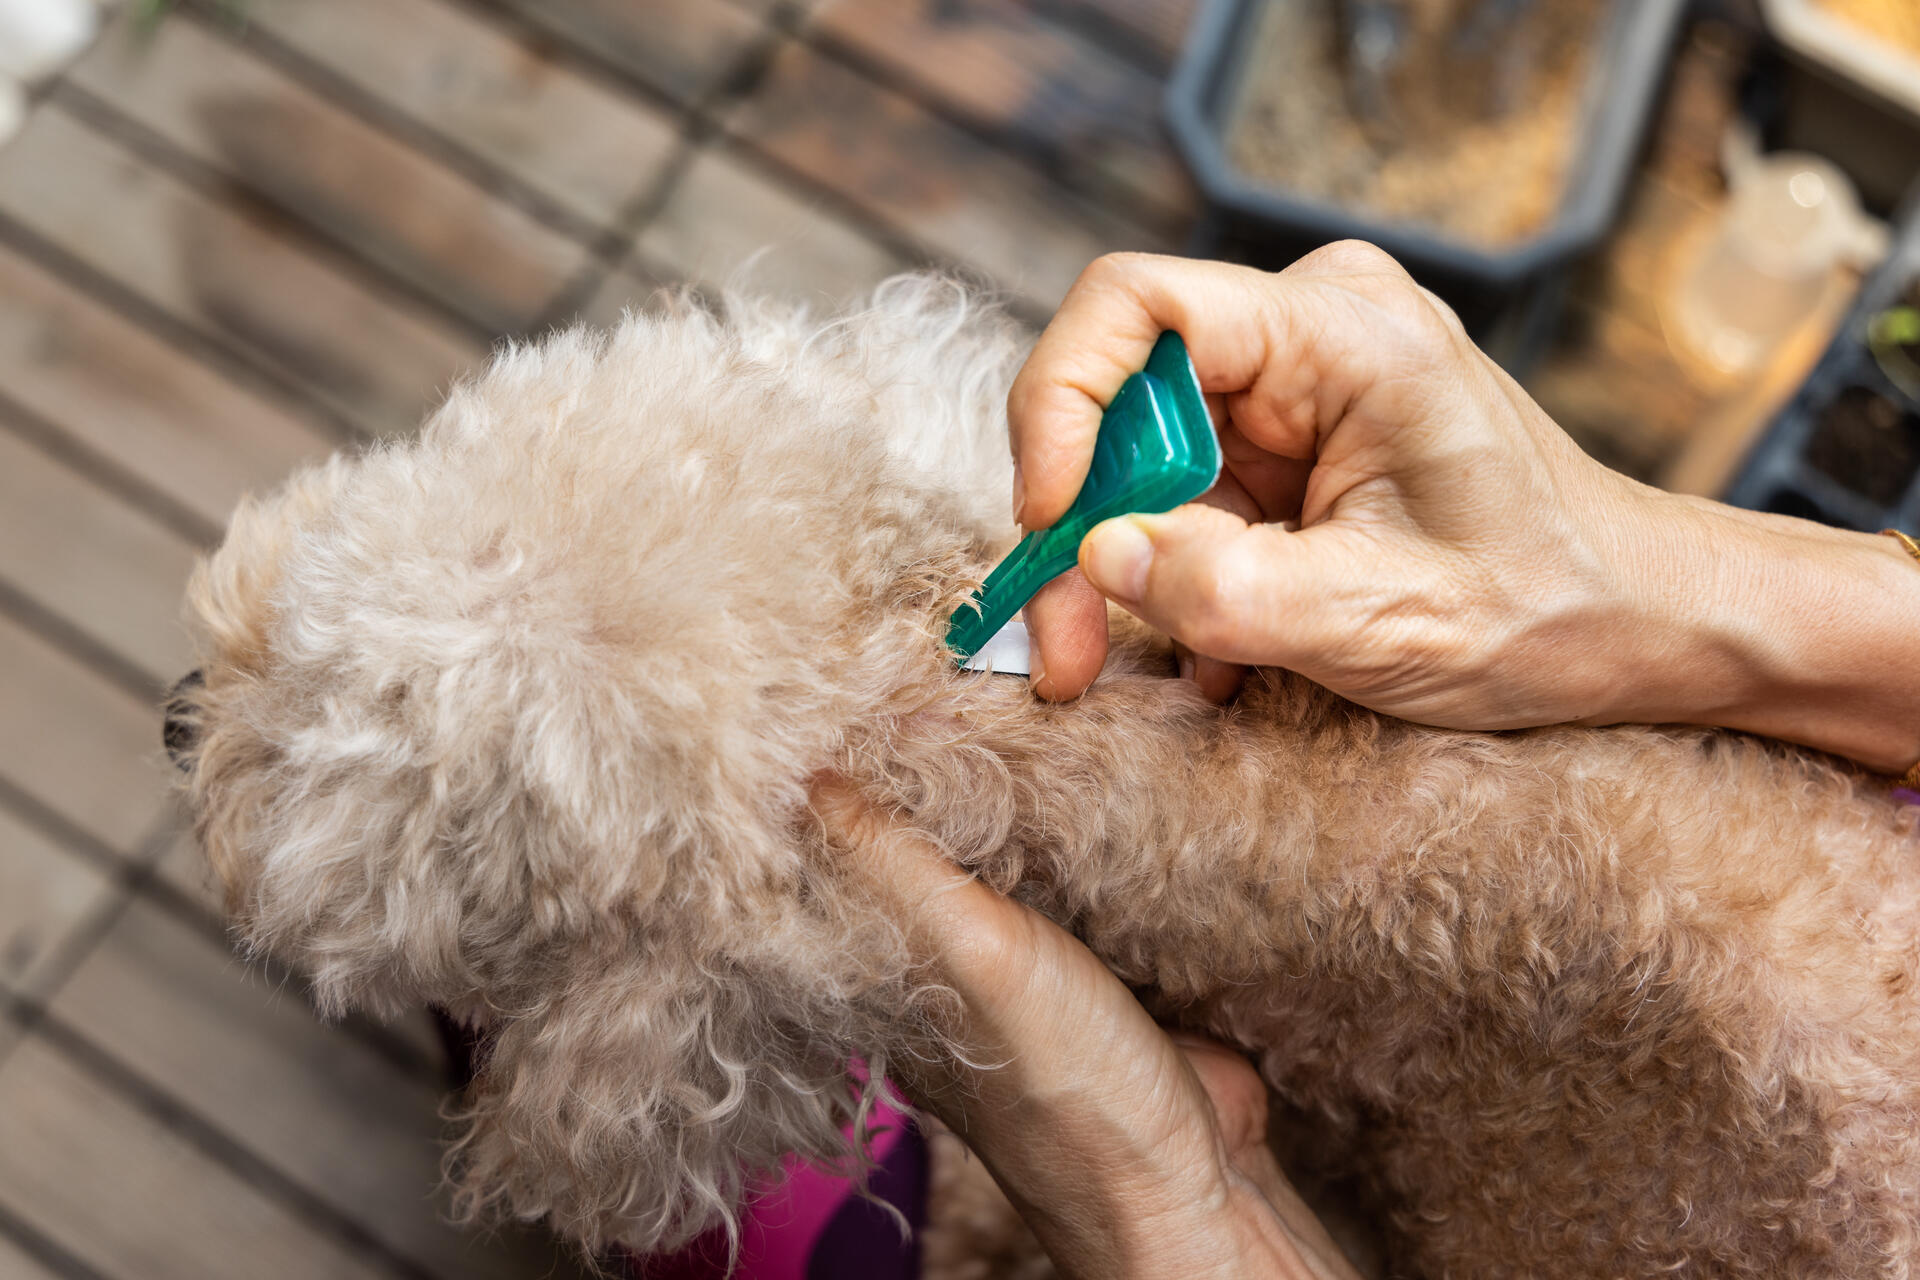 A woman applying tick spray to a dog